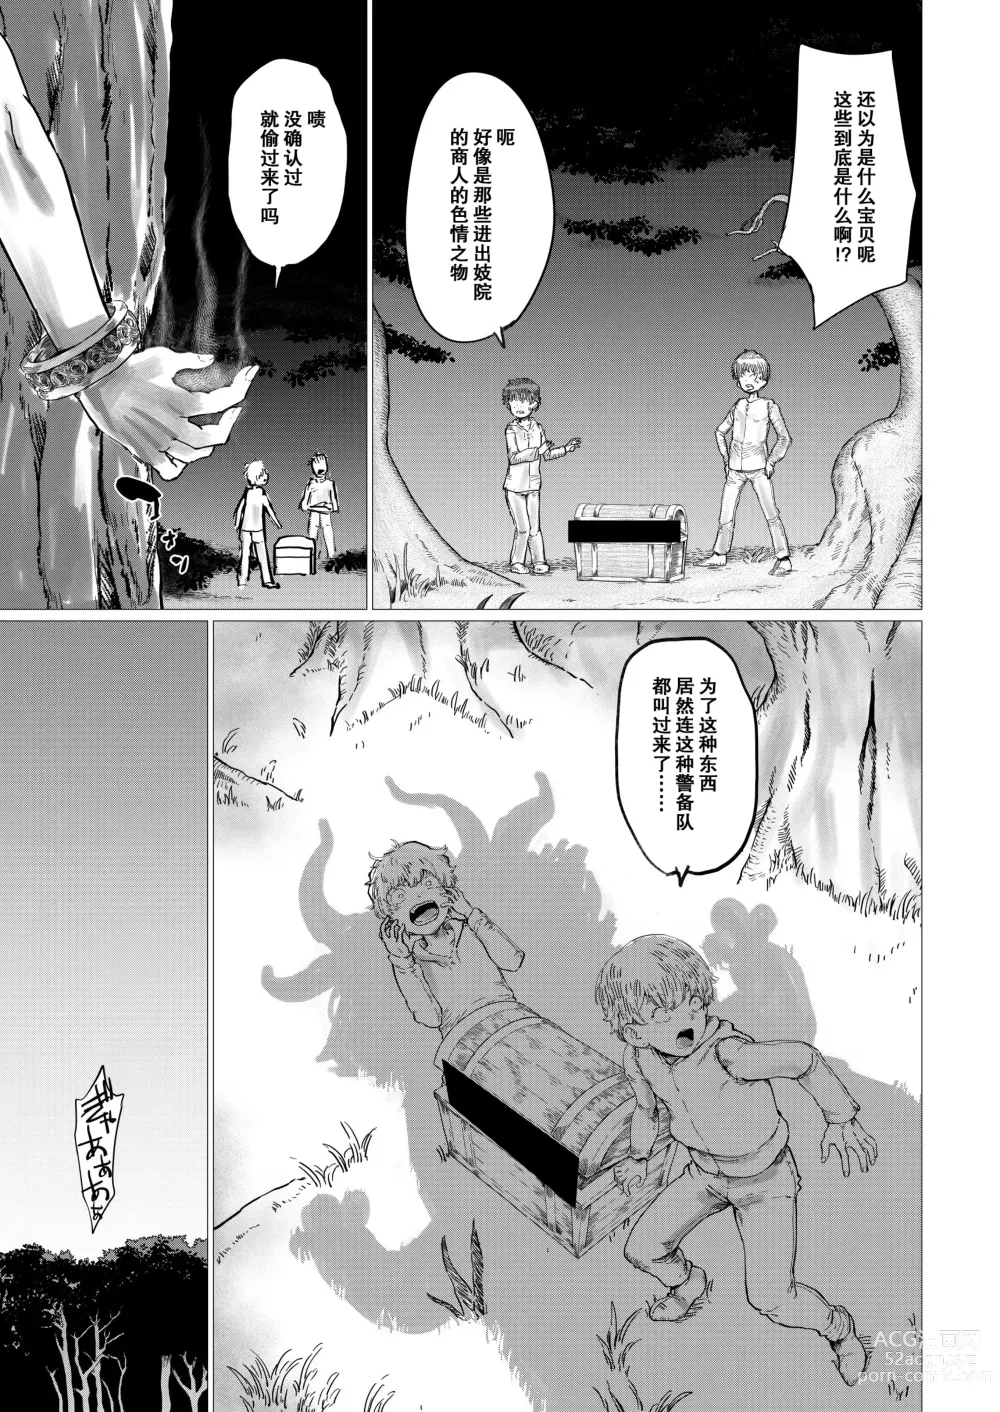 Page 7 of doujinshi Shikorufu